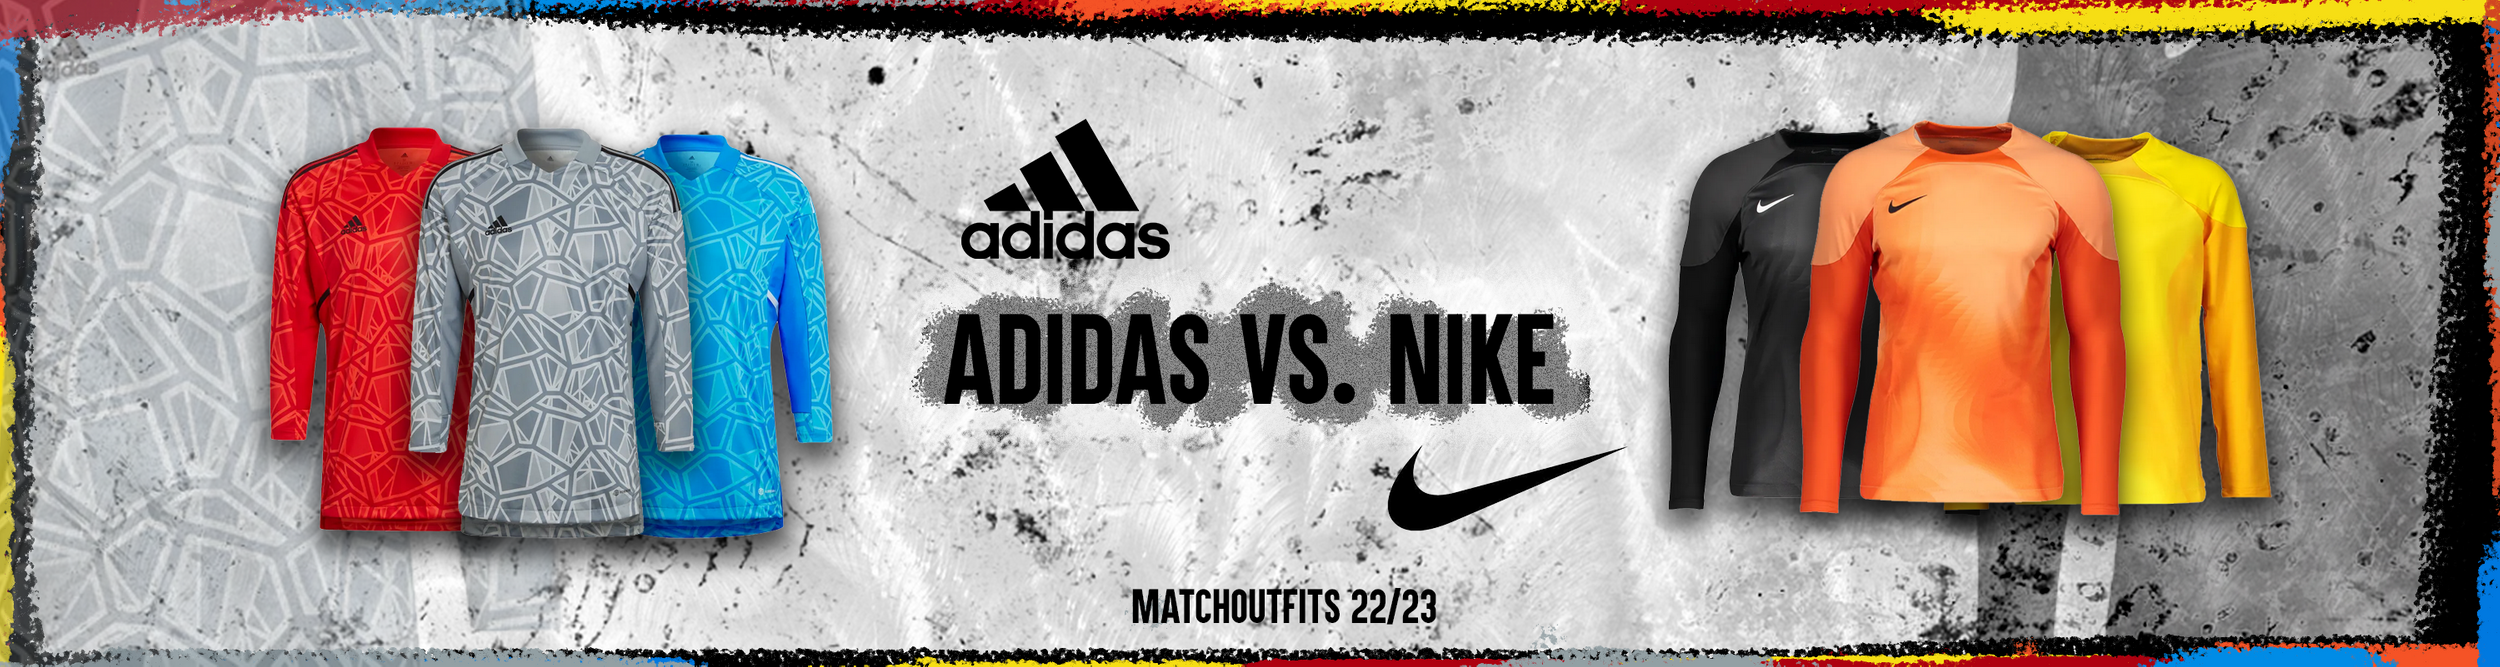 Adidas Match Outfits Nike Math Outfits 2022 2023